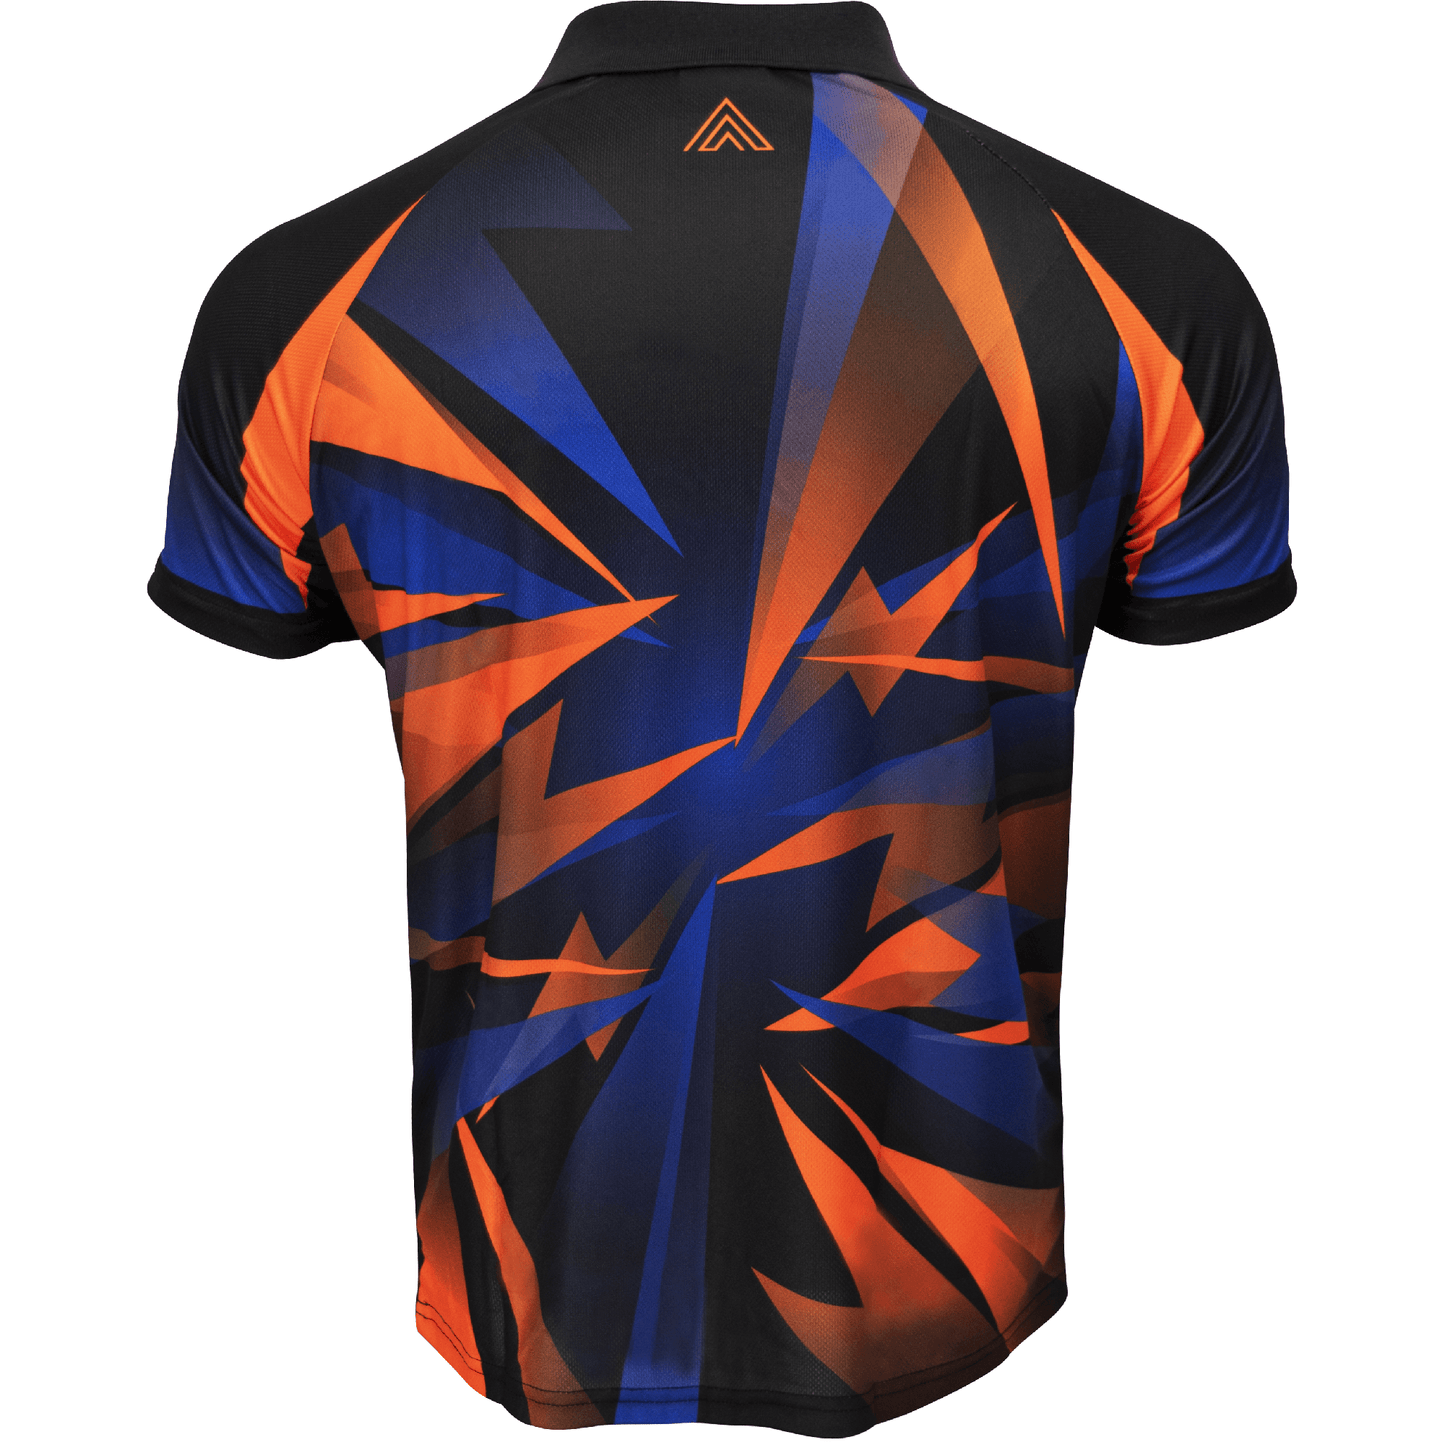 *Arraz Shard Dart Shirt - with Pocket - Black & Blue - Orange